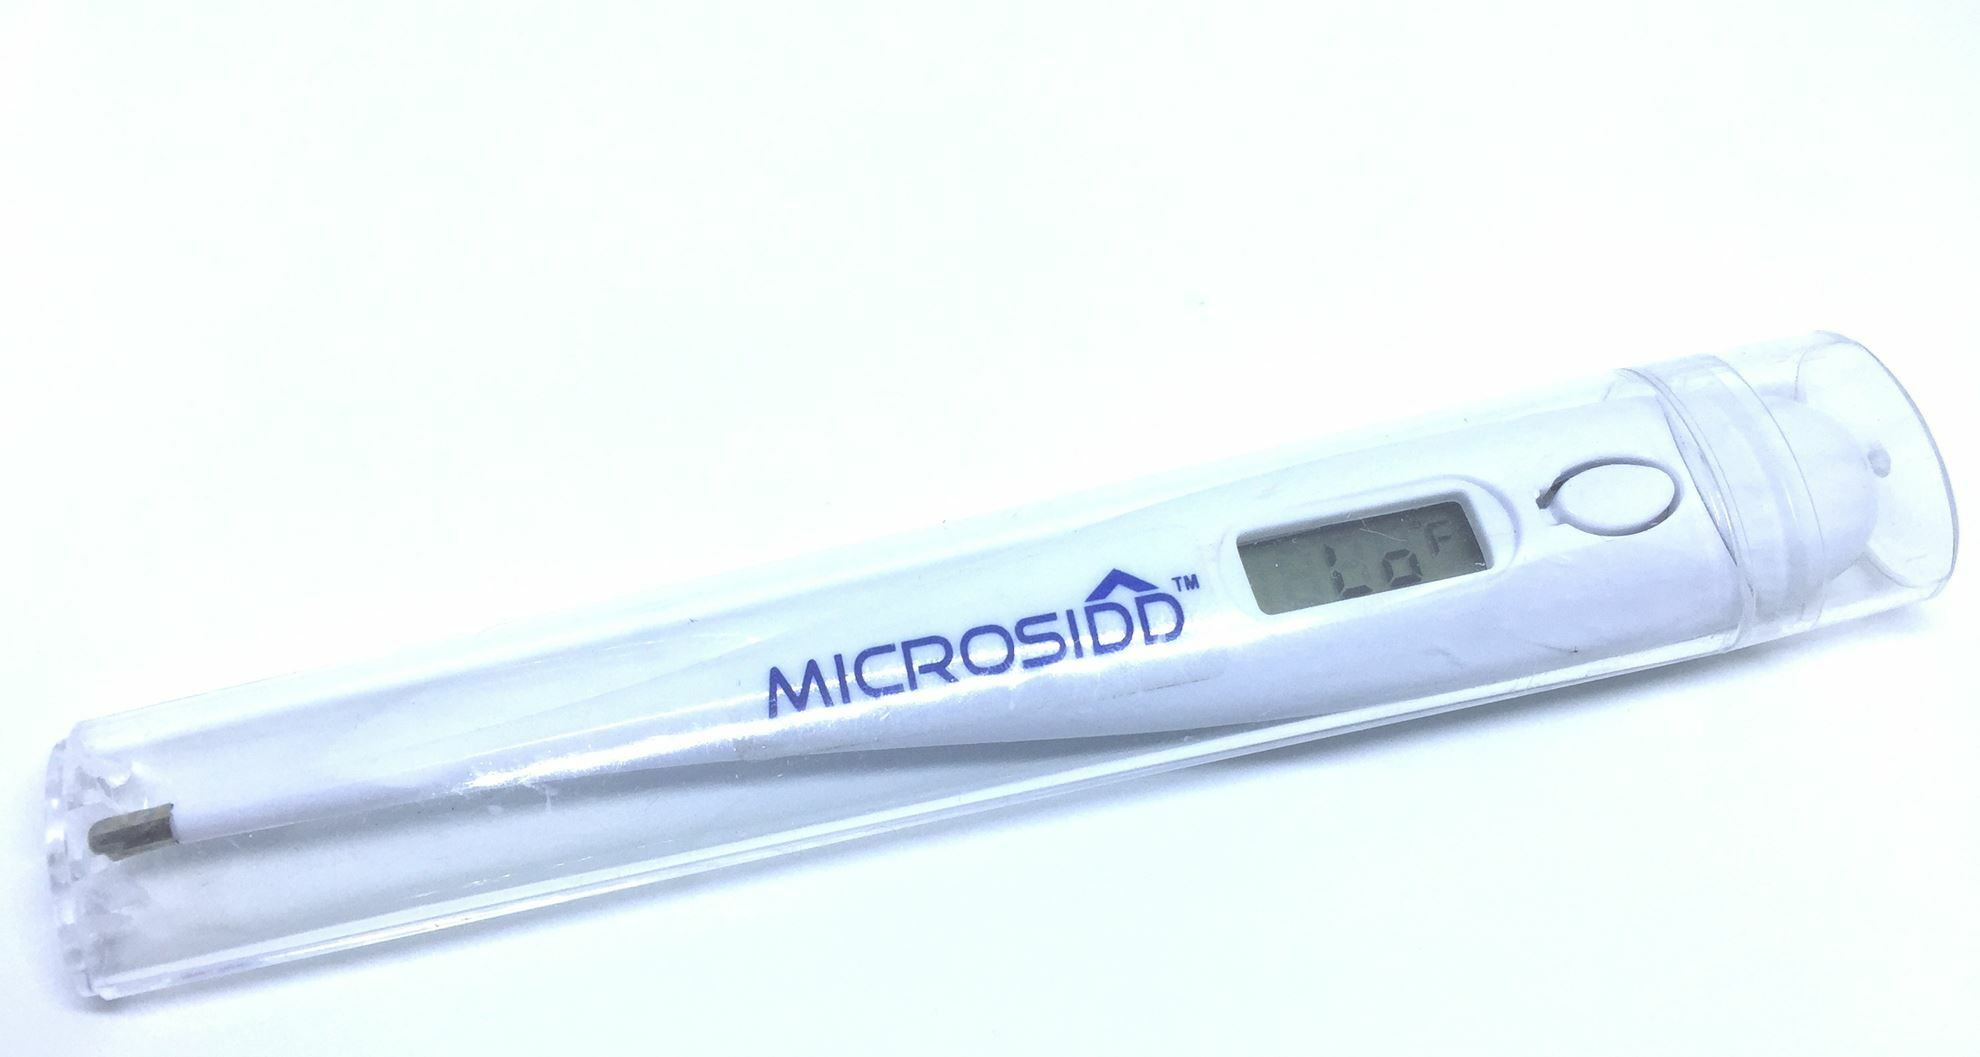 Digital Thermometer Microsidd